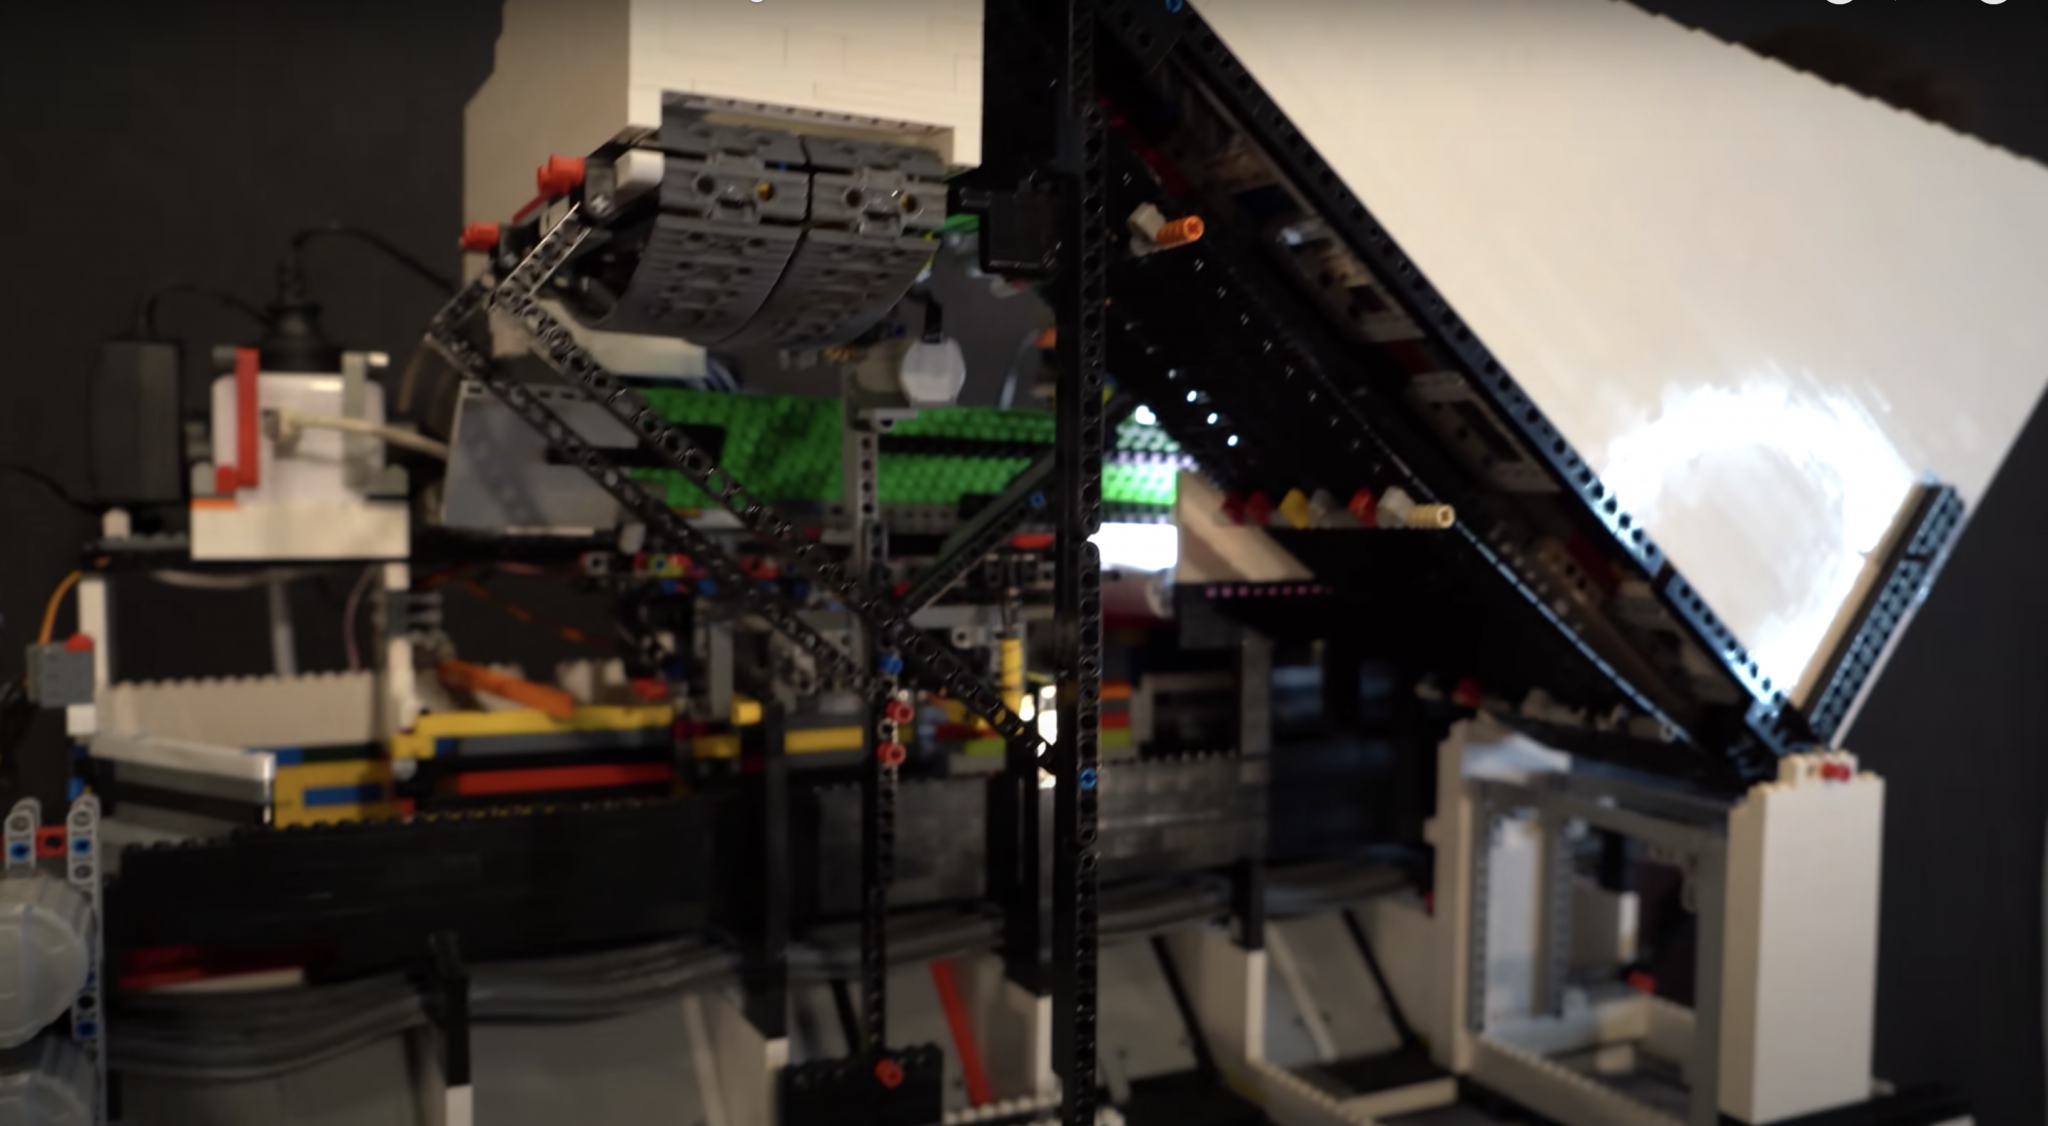 Universal Lego Sorter' Uses AI to Recognize Any Lego Brick